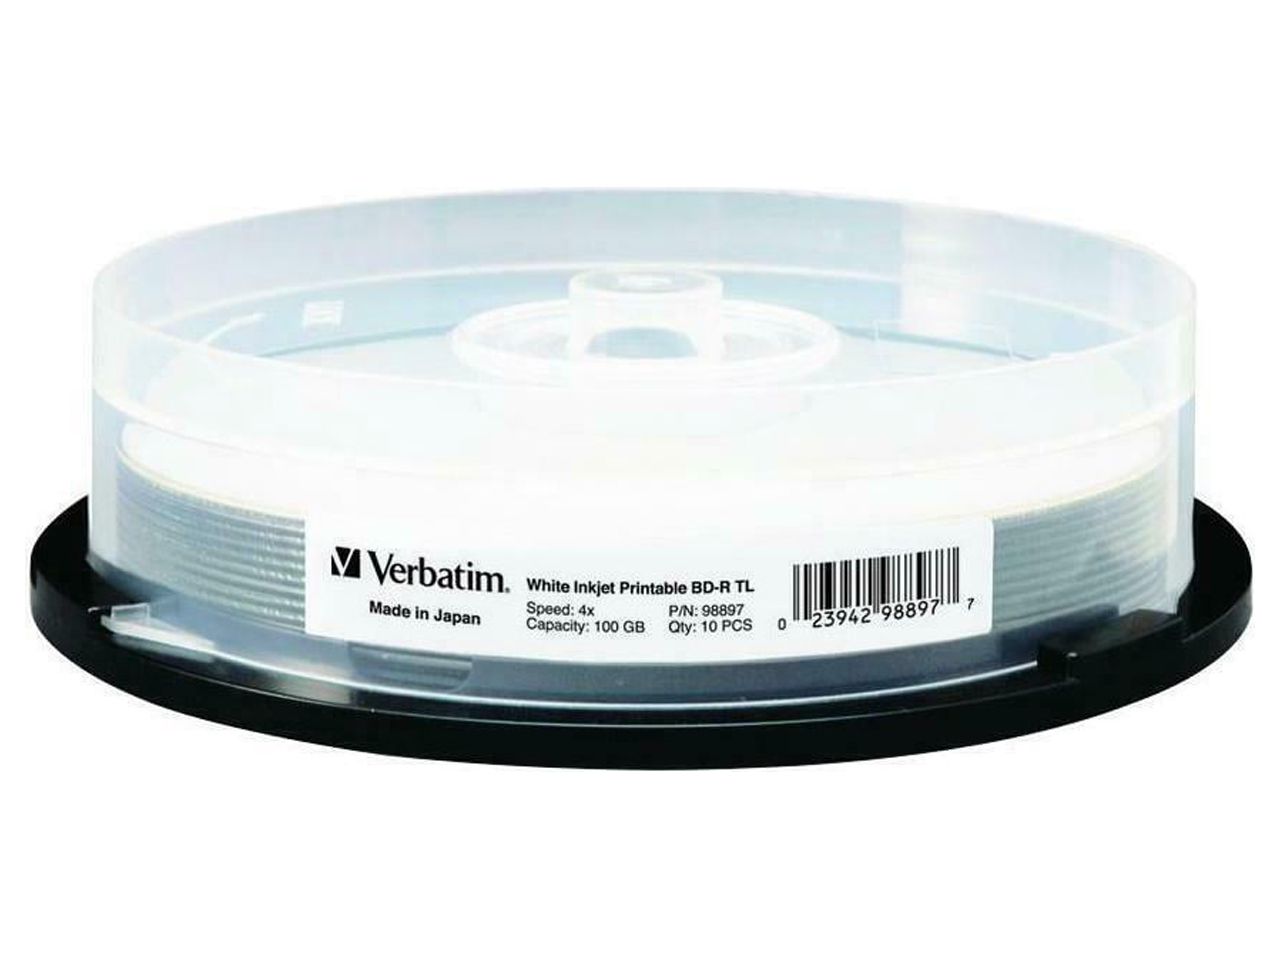 Verbatim Blu-ray Recordable Media - BD-R - 4x - 100 GB - 10 Pack Spindle - image 1 of 12